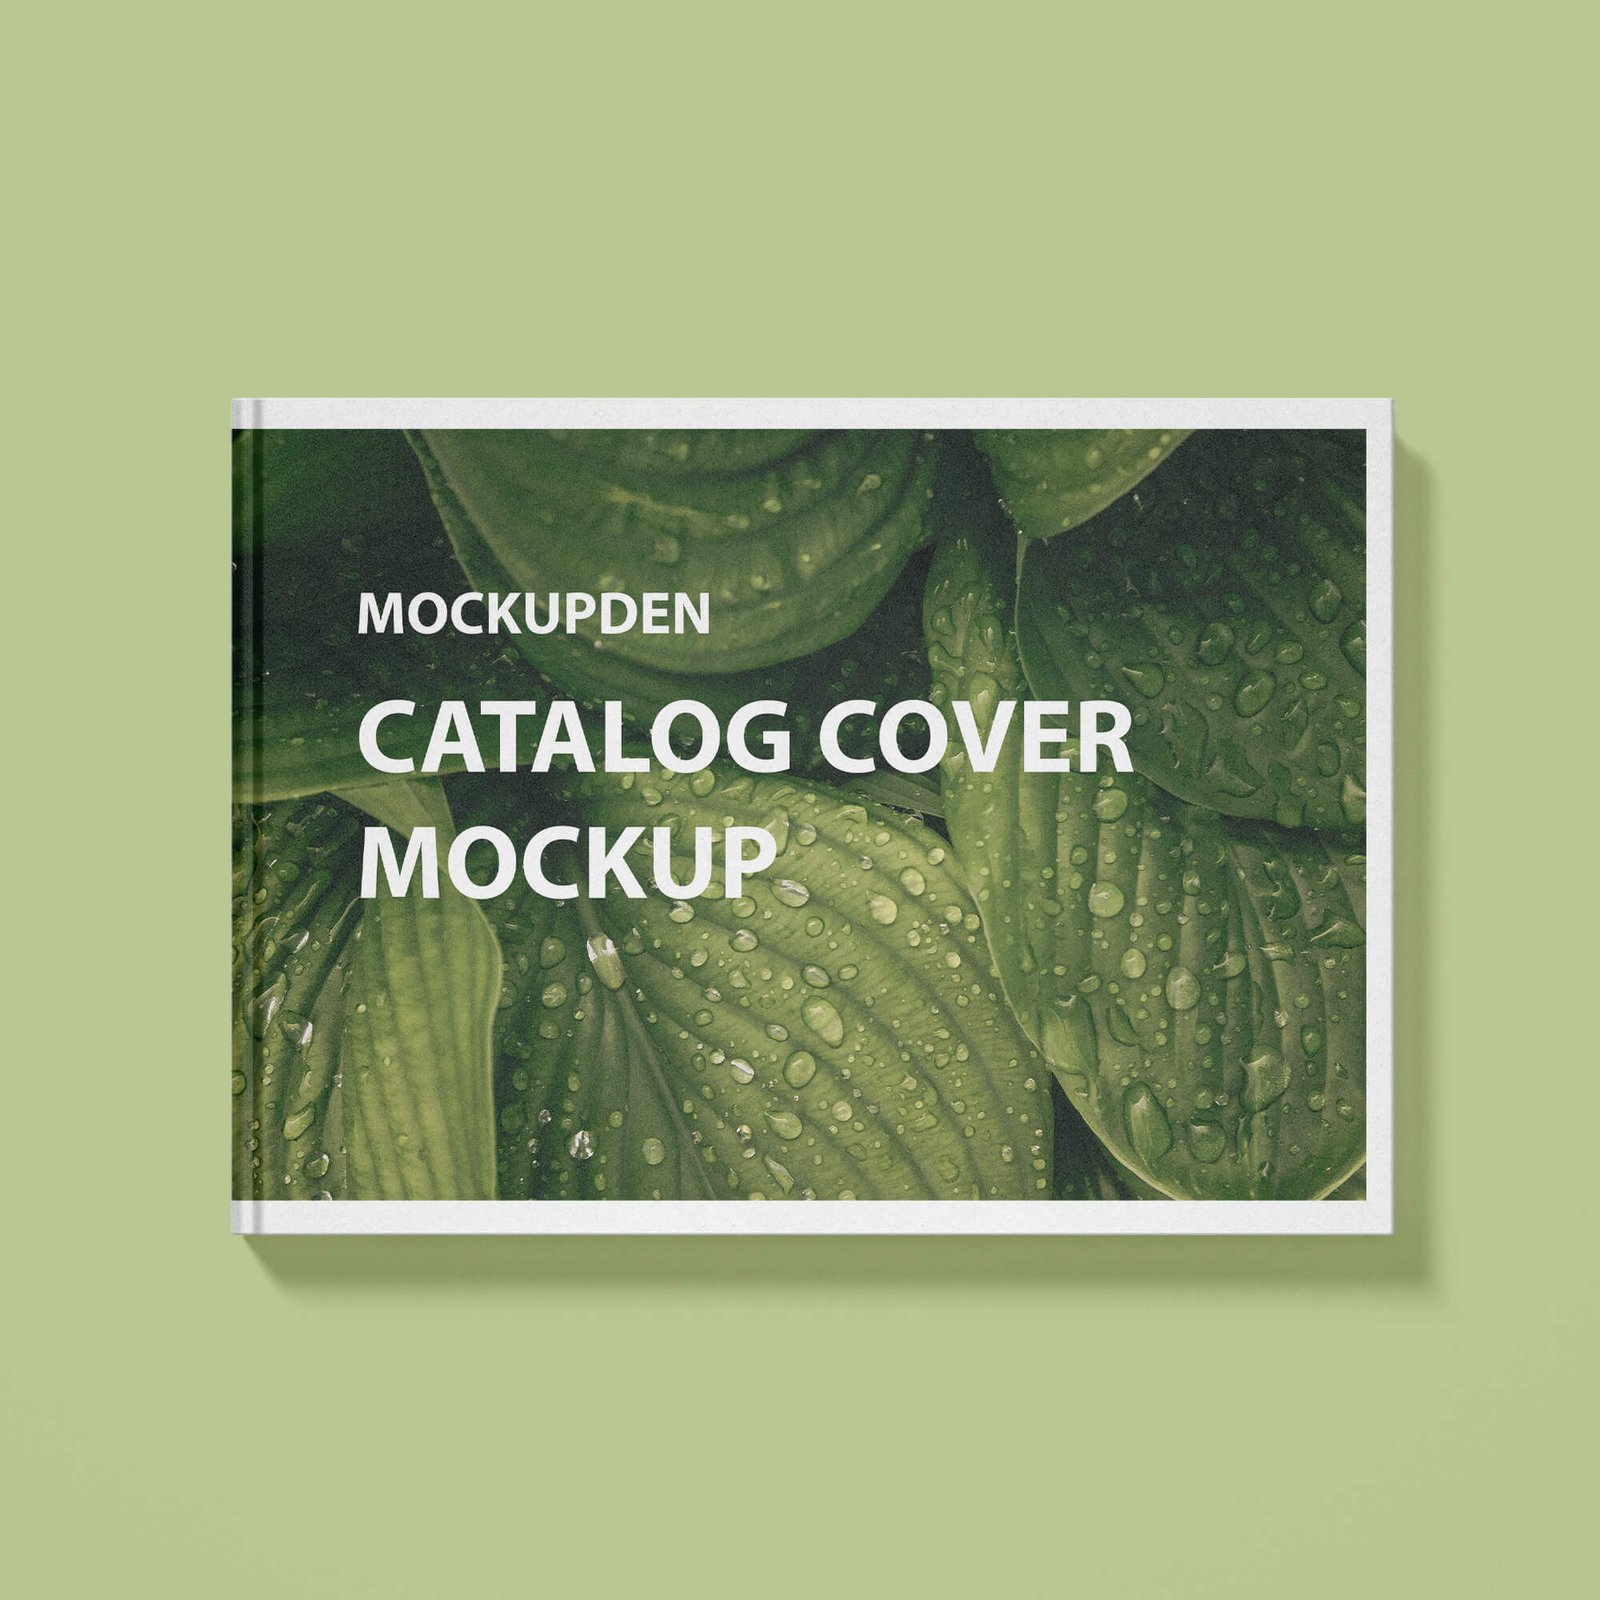 Design Free Catalog Cover Mockup PSD Template